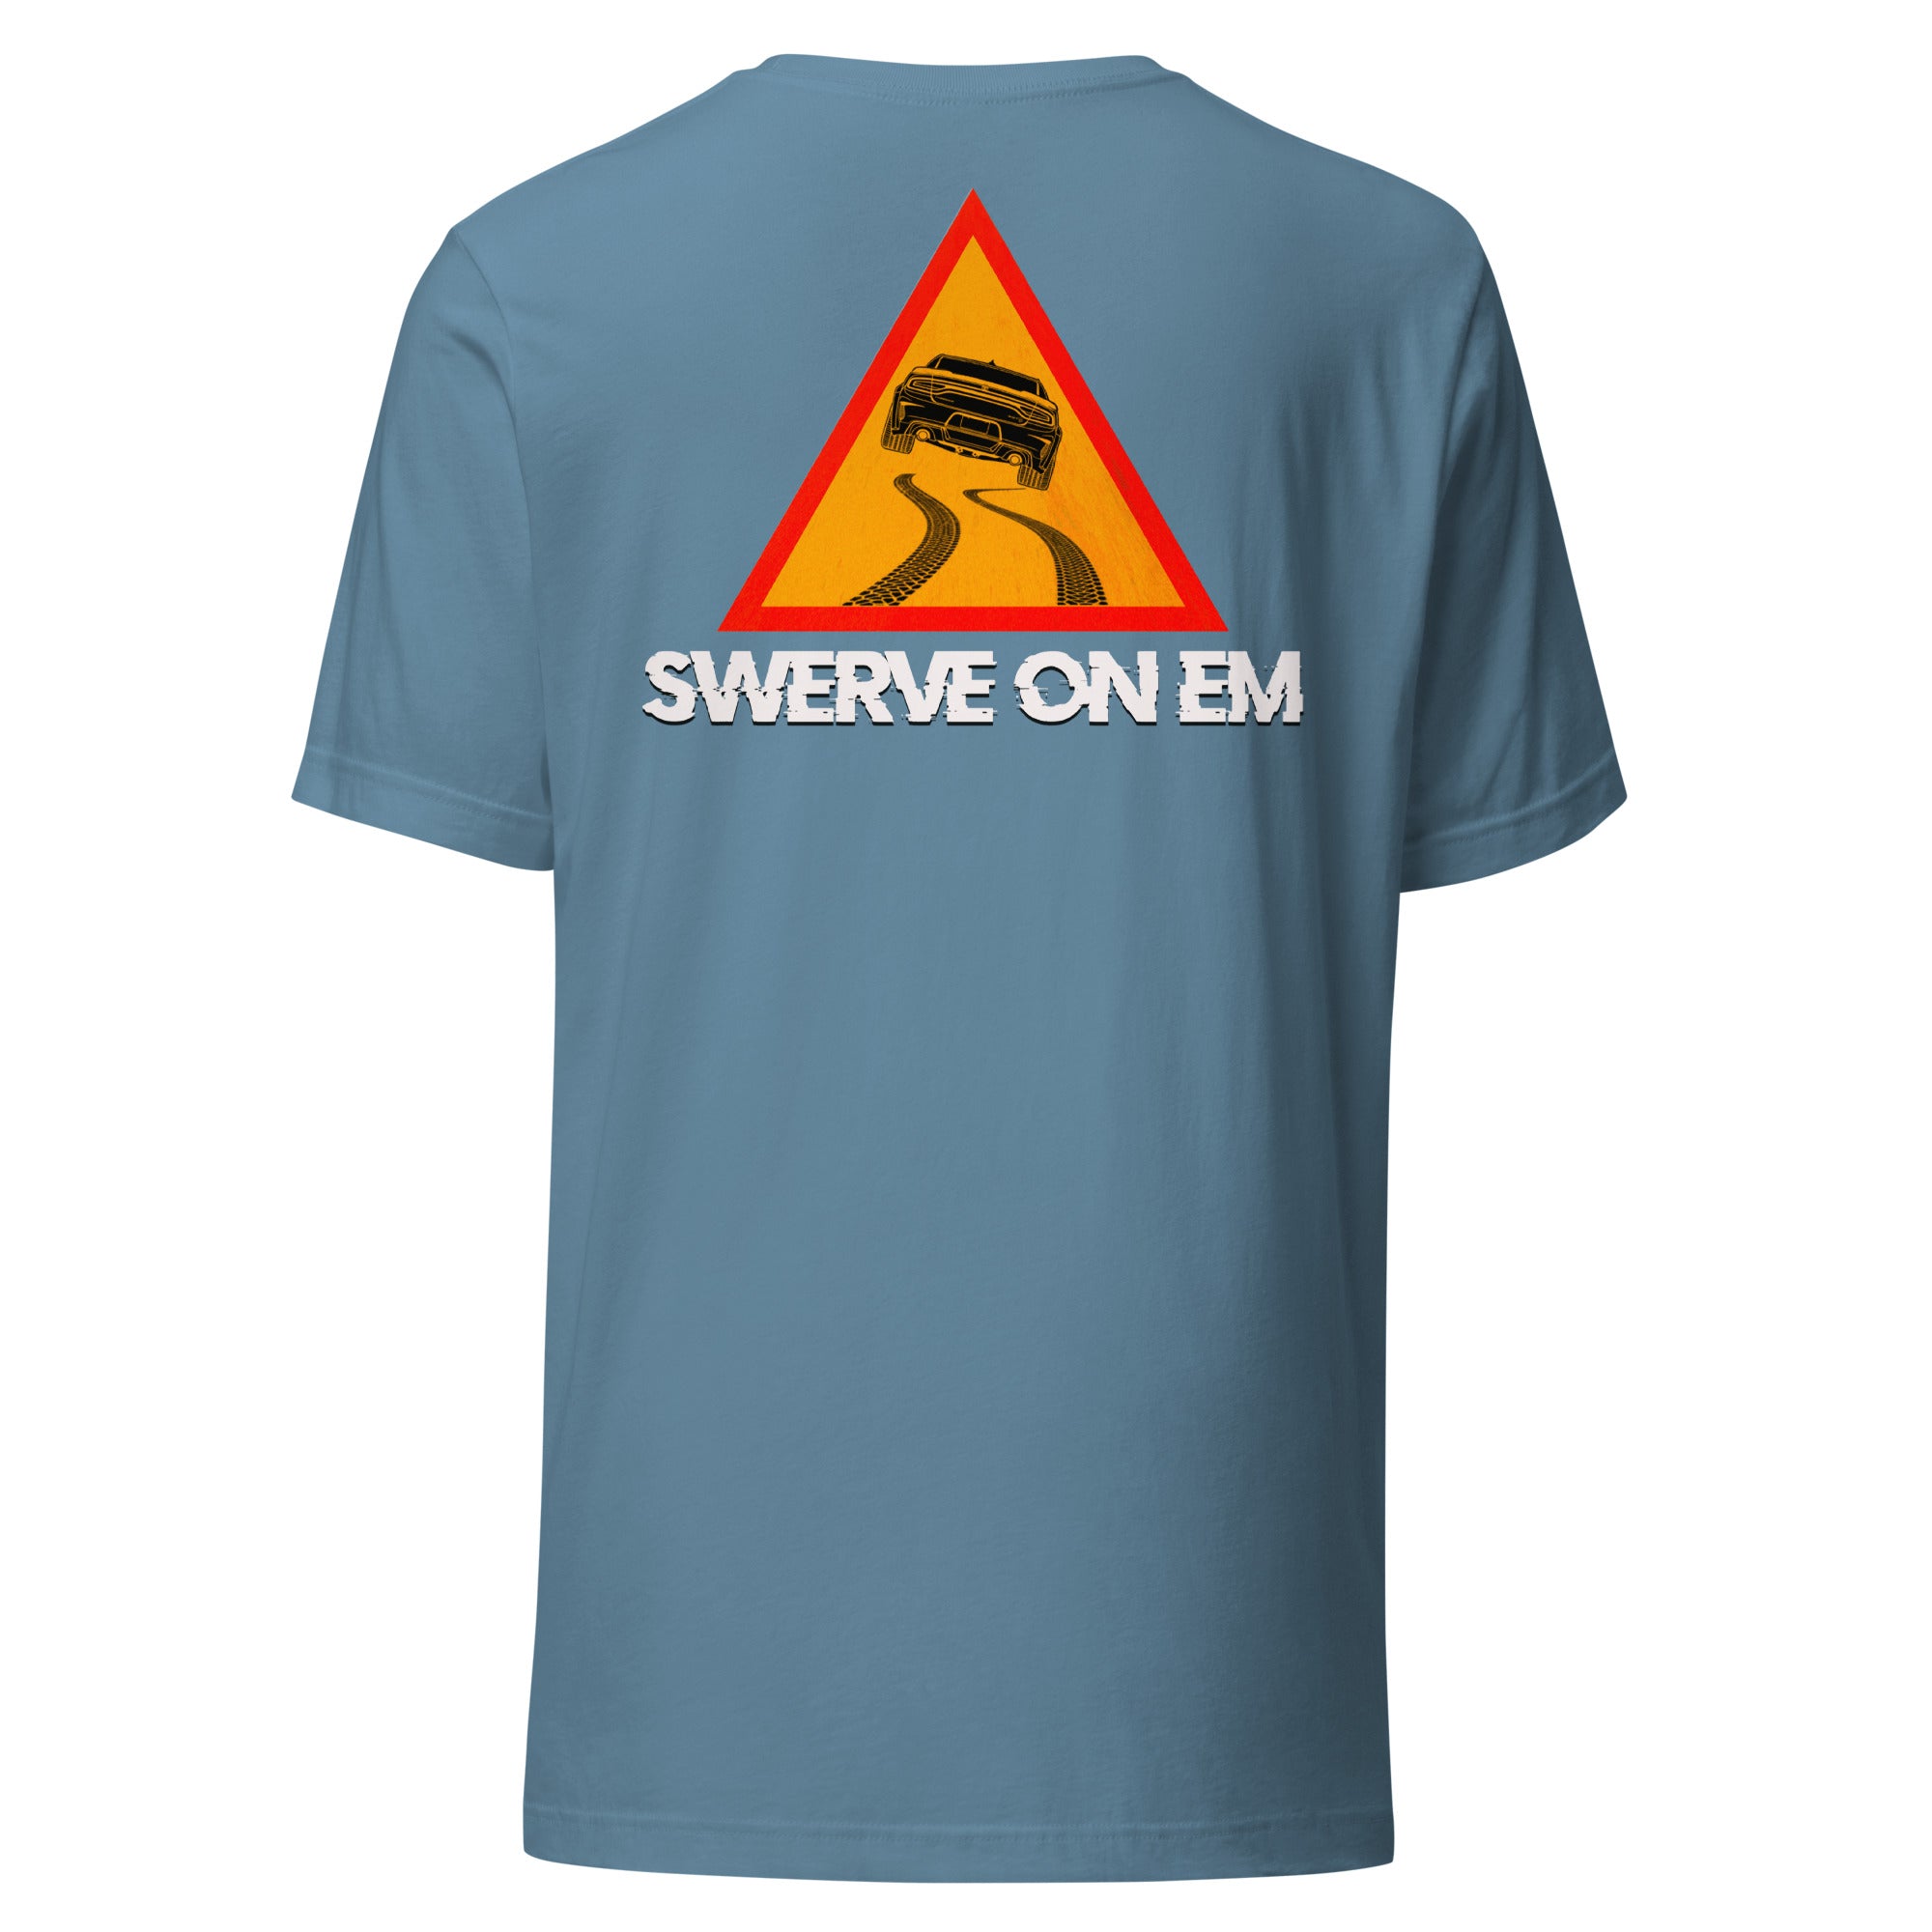 Big Haze - "Swerve On Em" - Unisex t-shirt